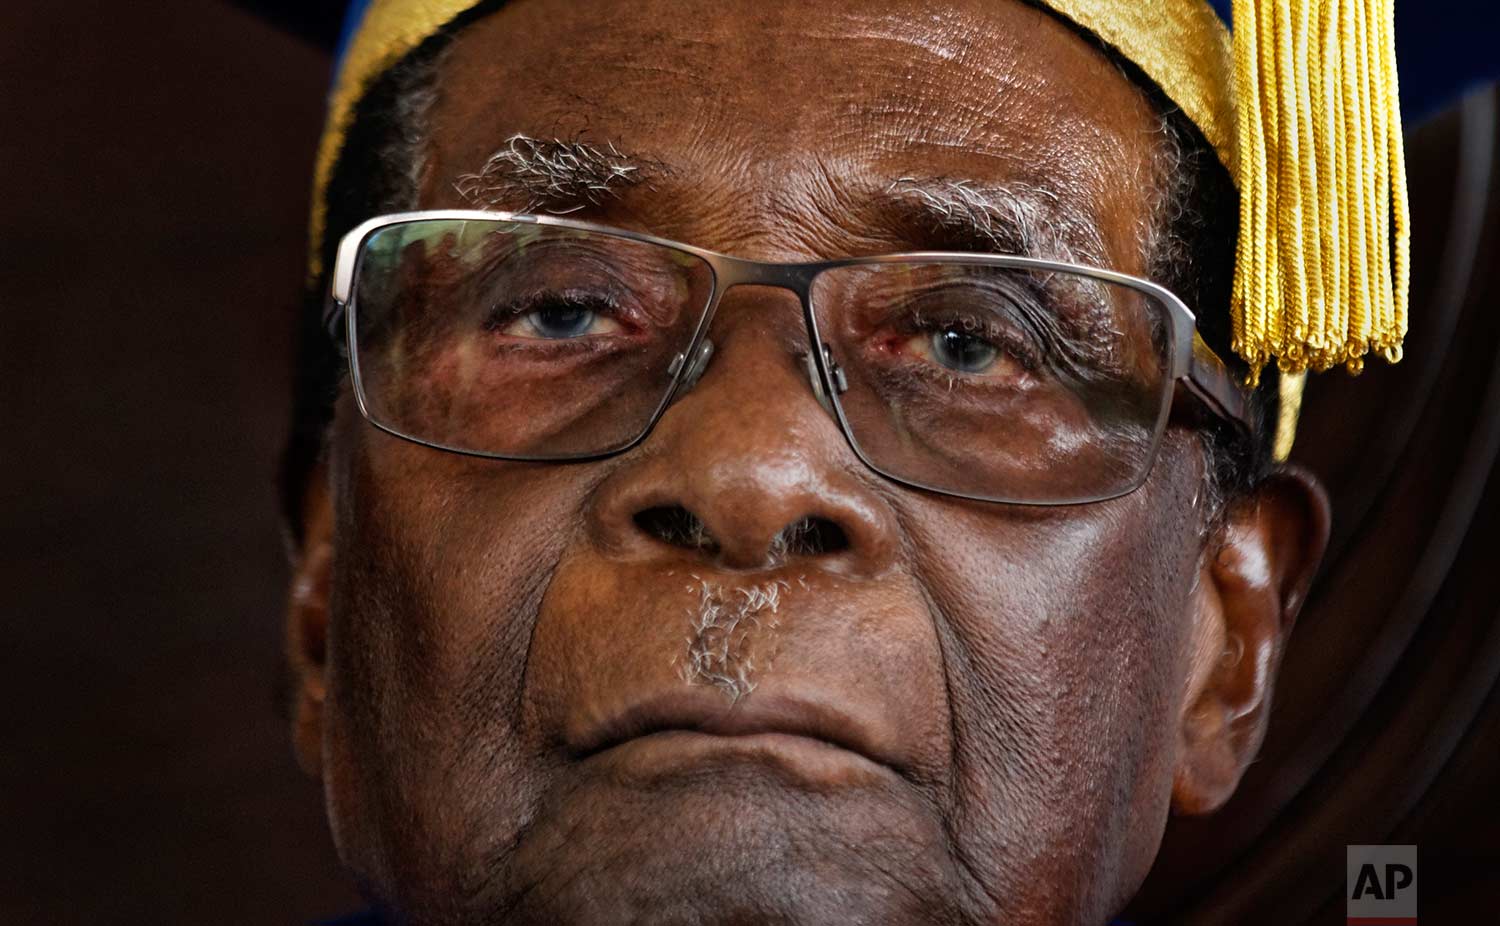  In this Friday, Nov. 17, 2017 photo, Zimbabwe's President Robert Mugabe sits for formal photographs with university officials, after presiding over a student graduation ceremony at Zimbabwe Open University on the outskirts of Harare, Zimbabwe. Mugab